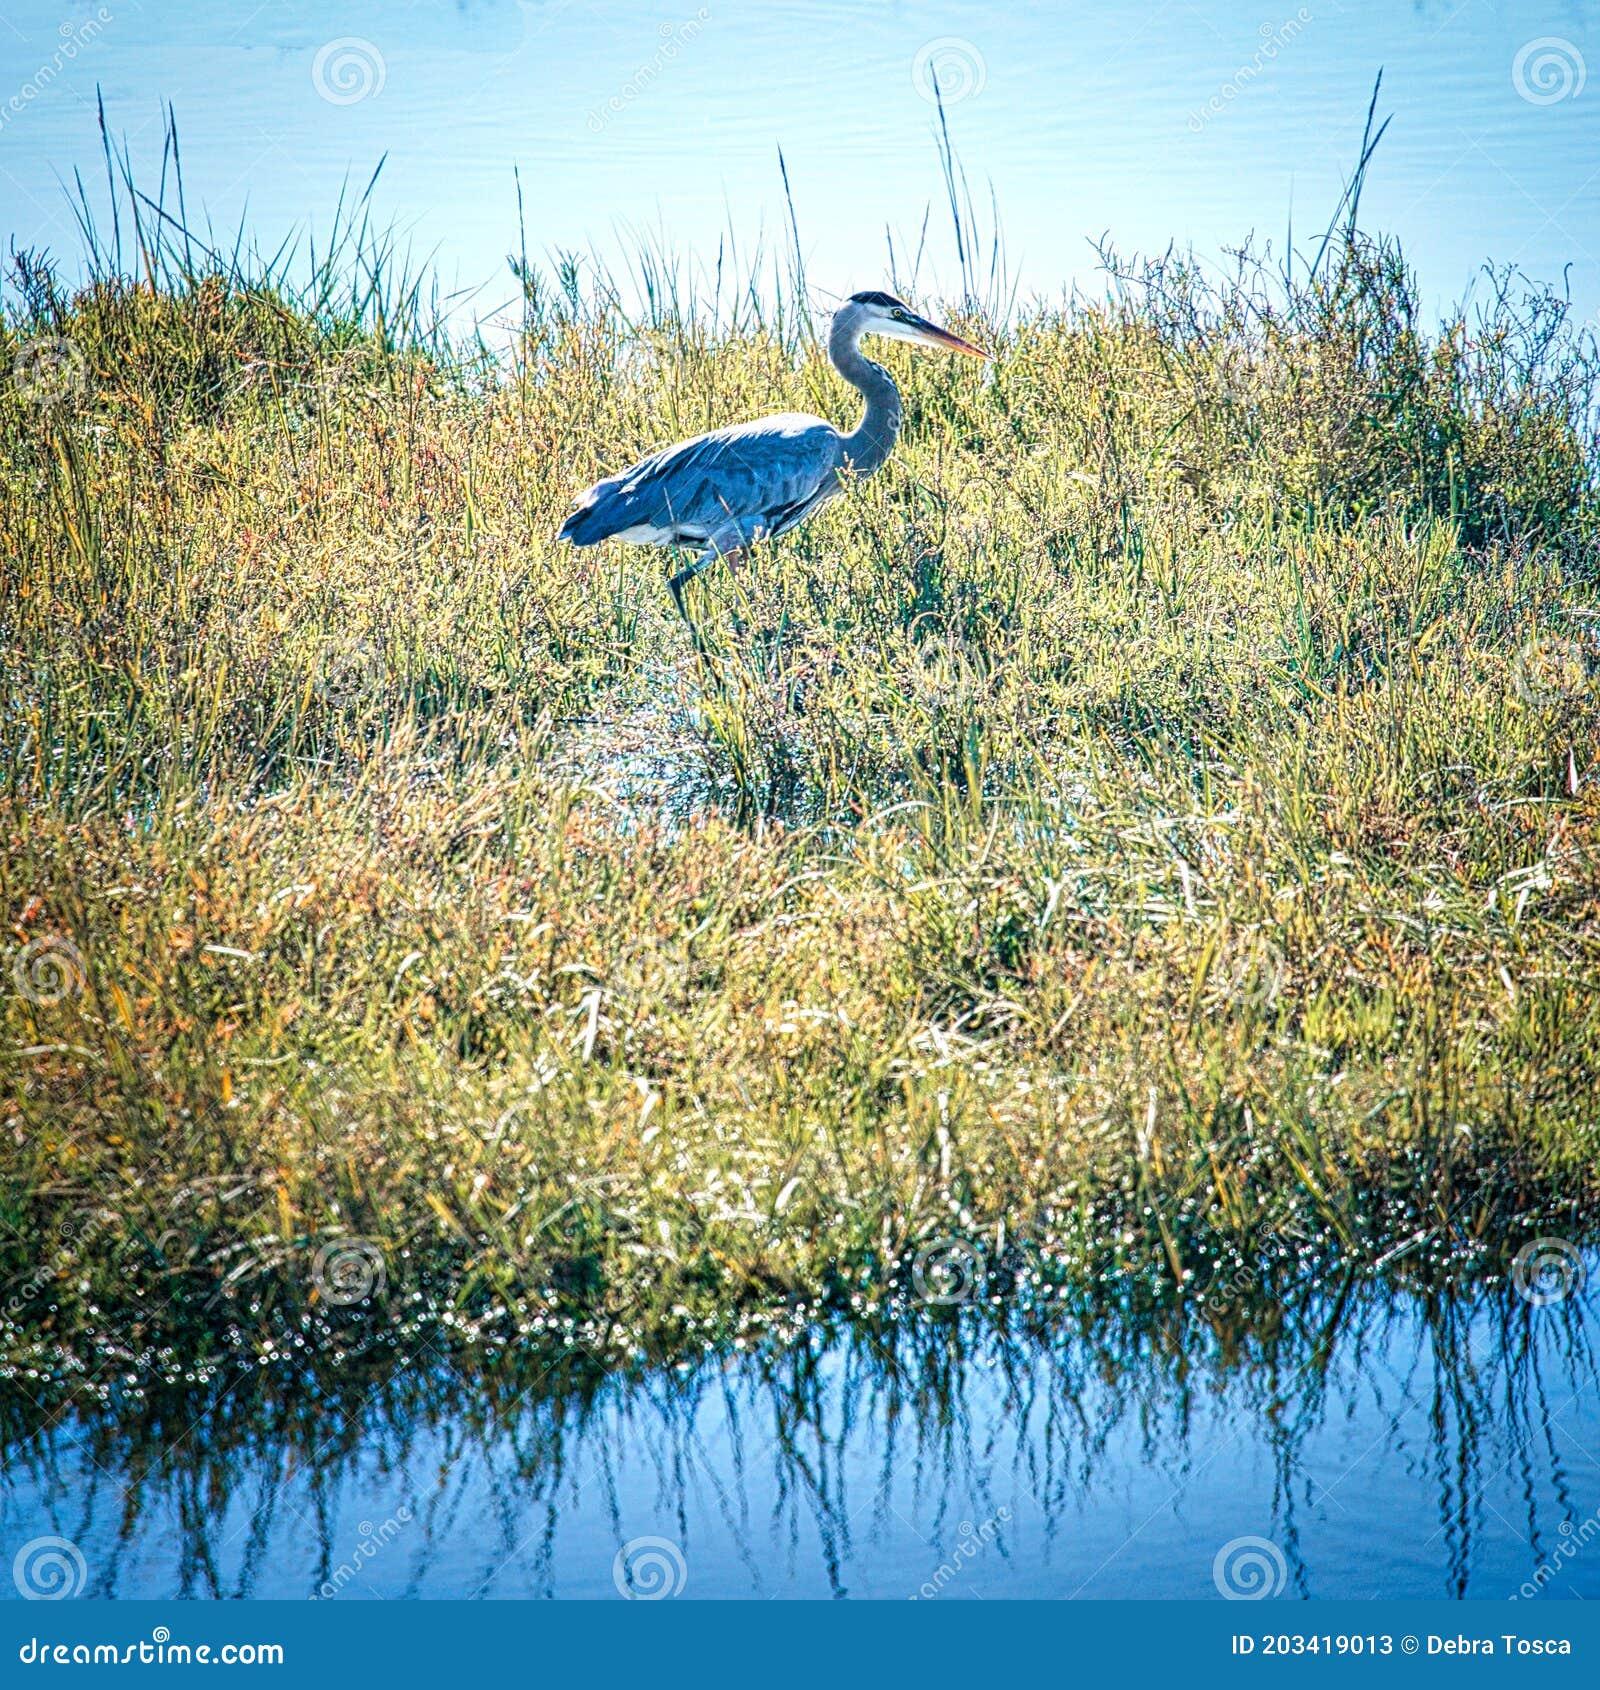 blue heron  bird bolsa chica ecological reserve